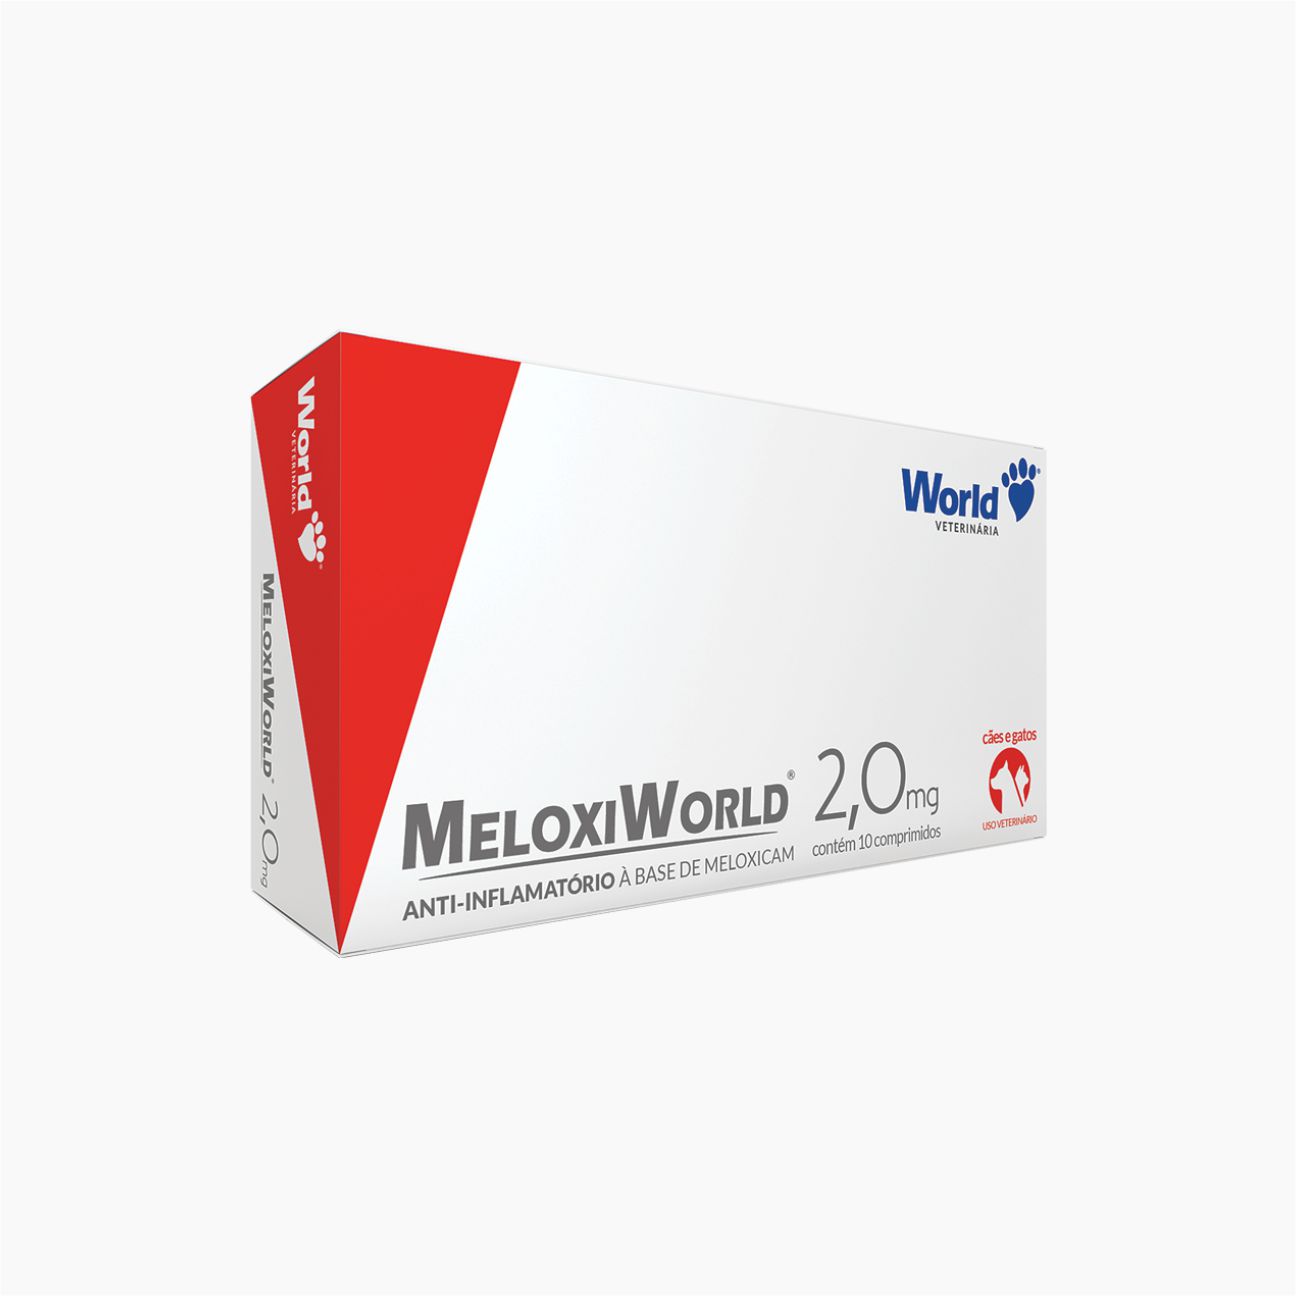 MeloxiWorld 2,0mg